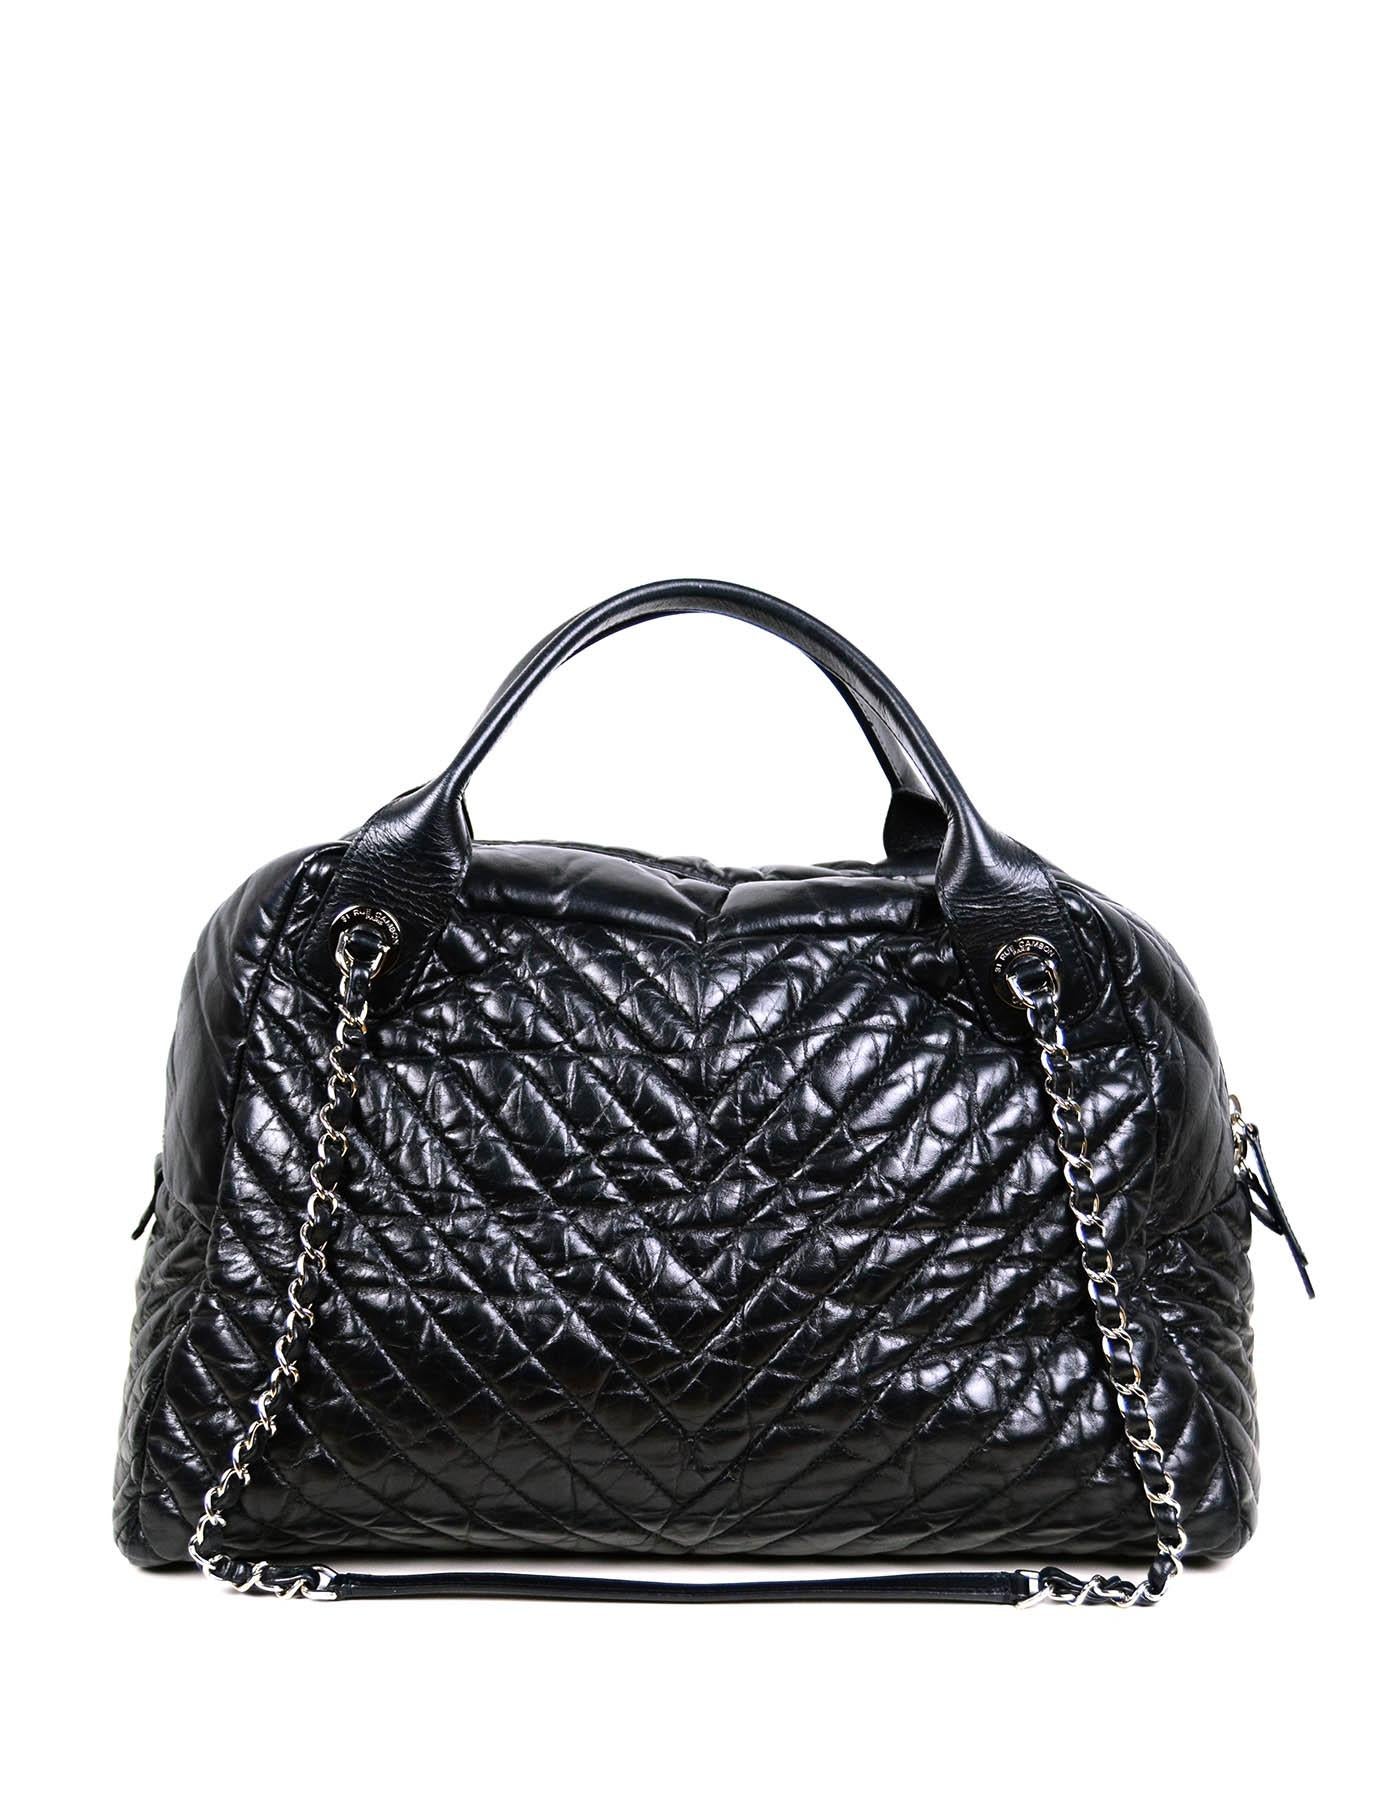 Women's Chanel Black Aged Calfskin Leather Chevron Large Soft Bowling Bag rt. $4, 200